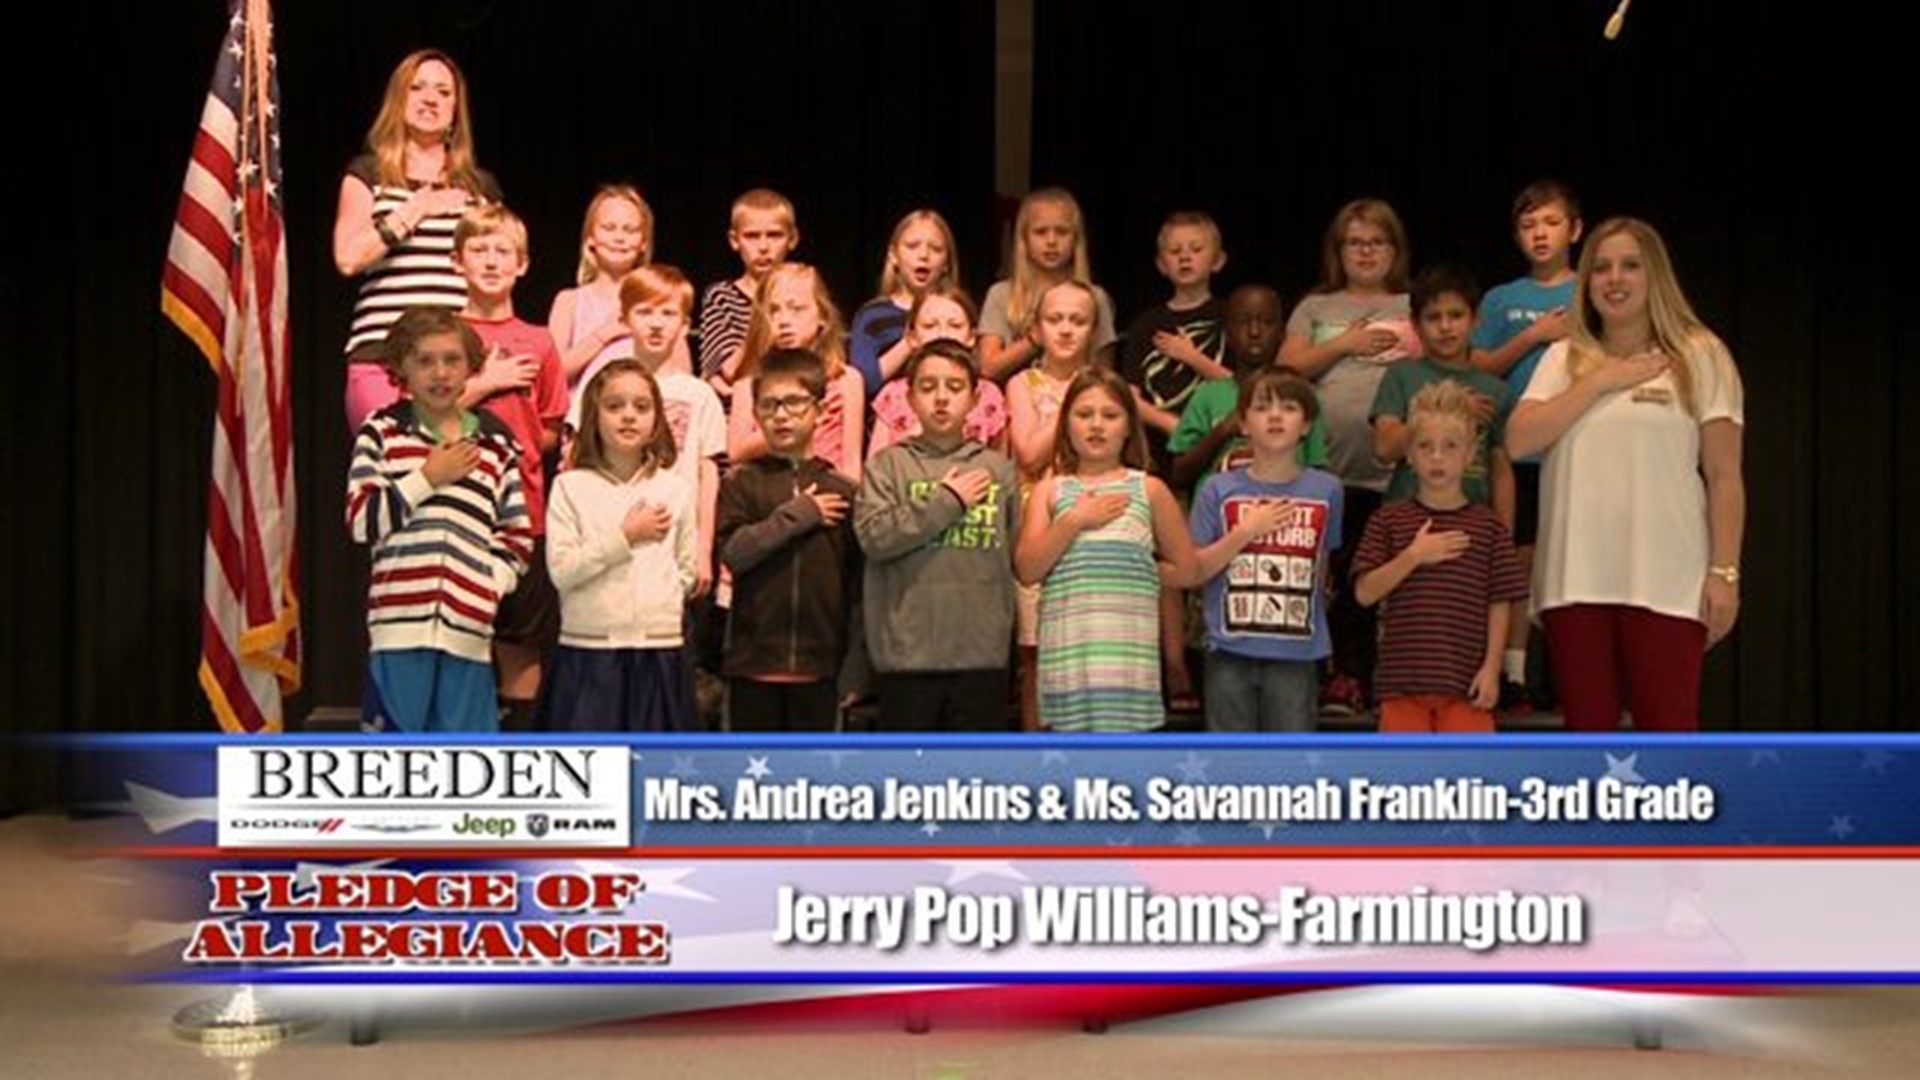 Jerry Pop Williams, Farmington - Mrs. Andrea Jenkins & Ms. Savannah Franklin - 3rd Grade